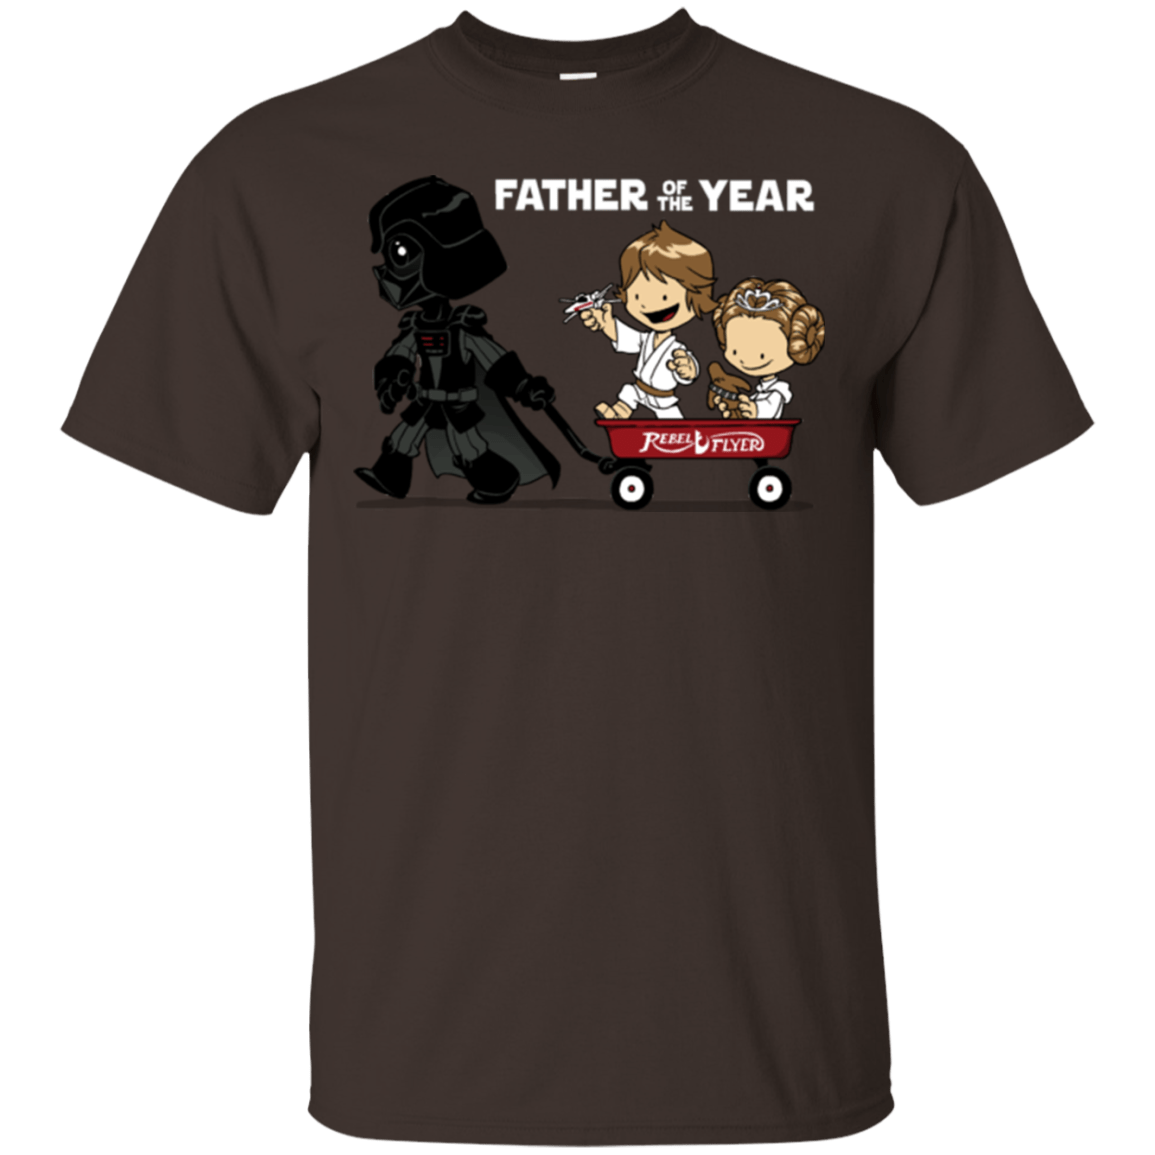 T-Shirts Dark Chocolate / Small WagonRide T-Shirt